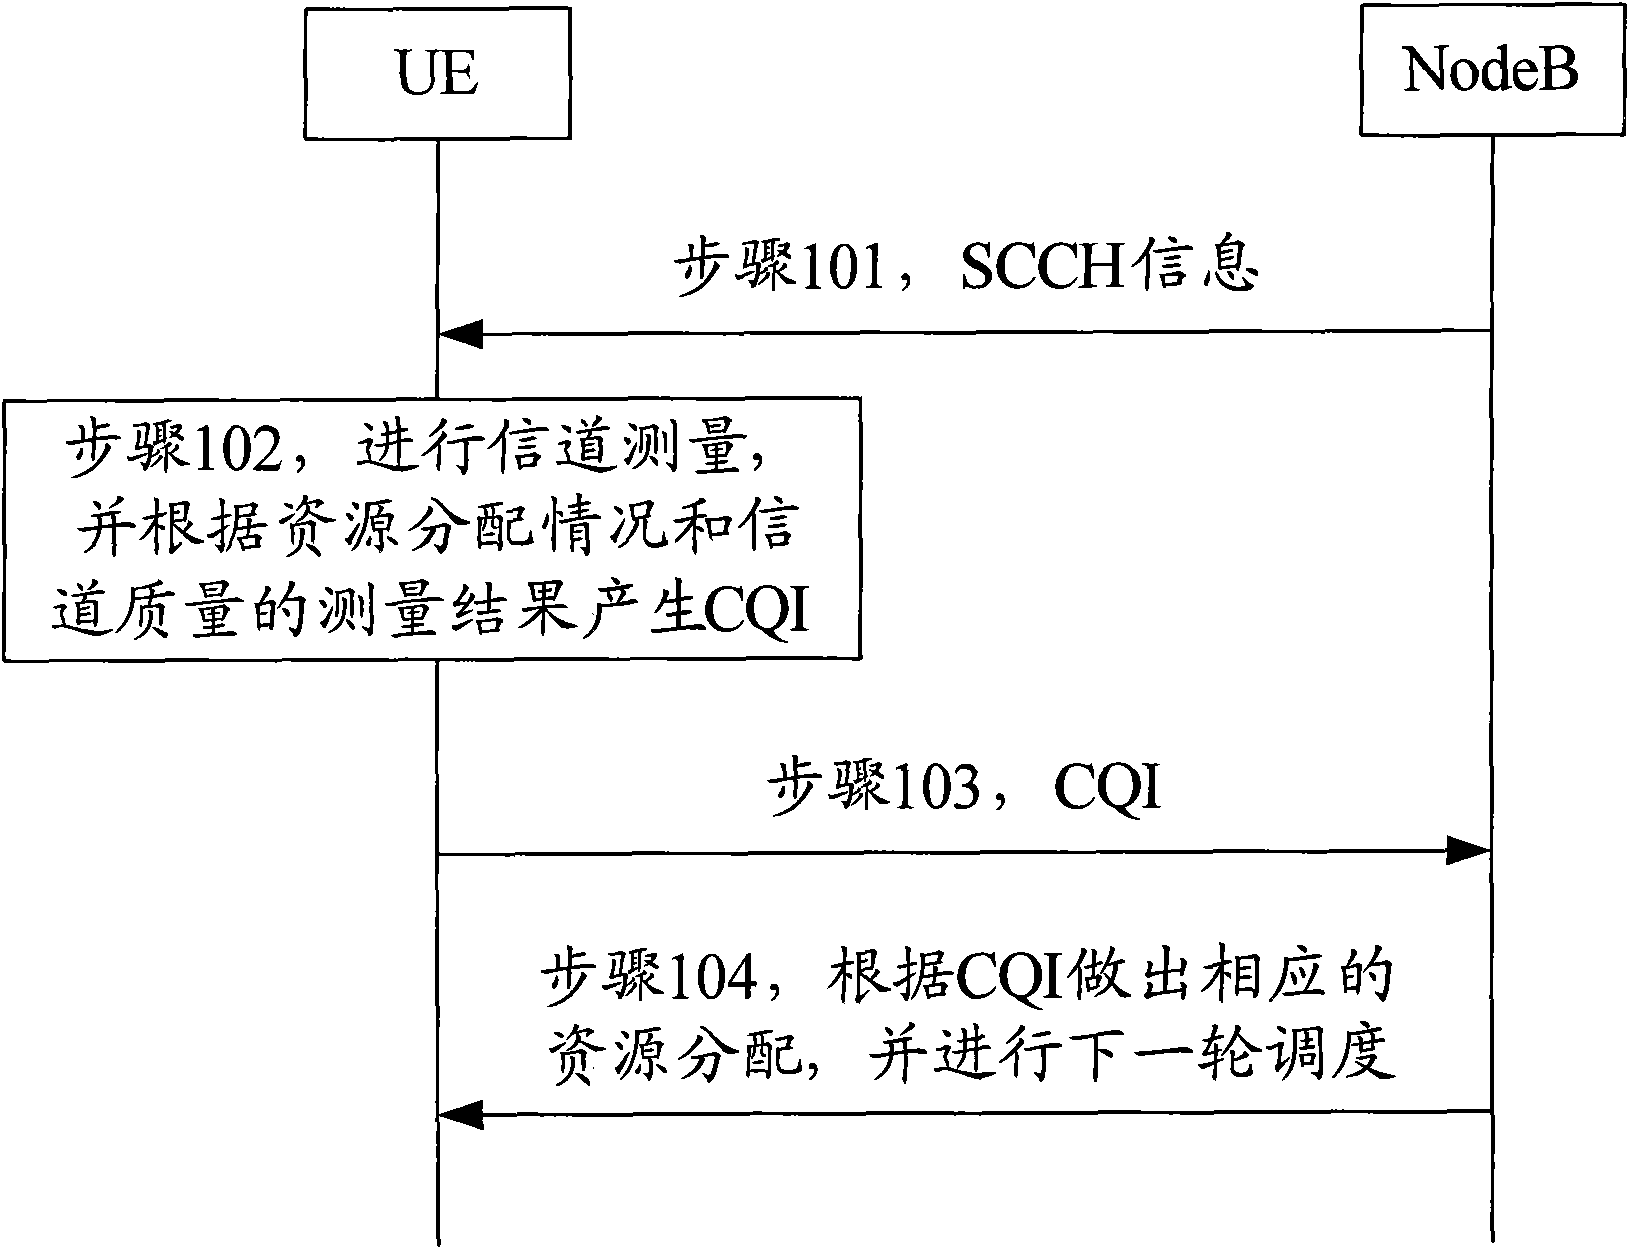 CQI correction method and base station